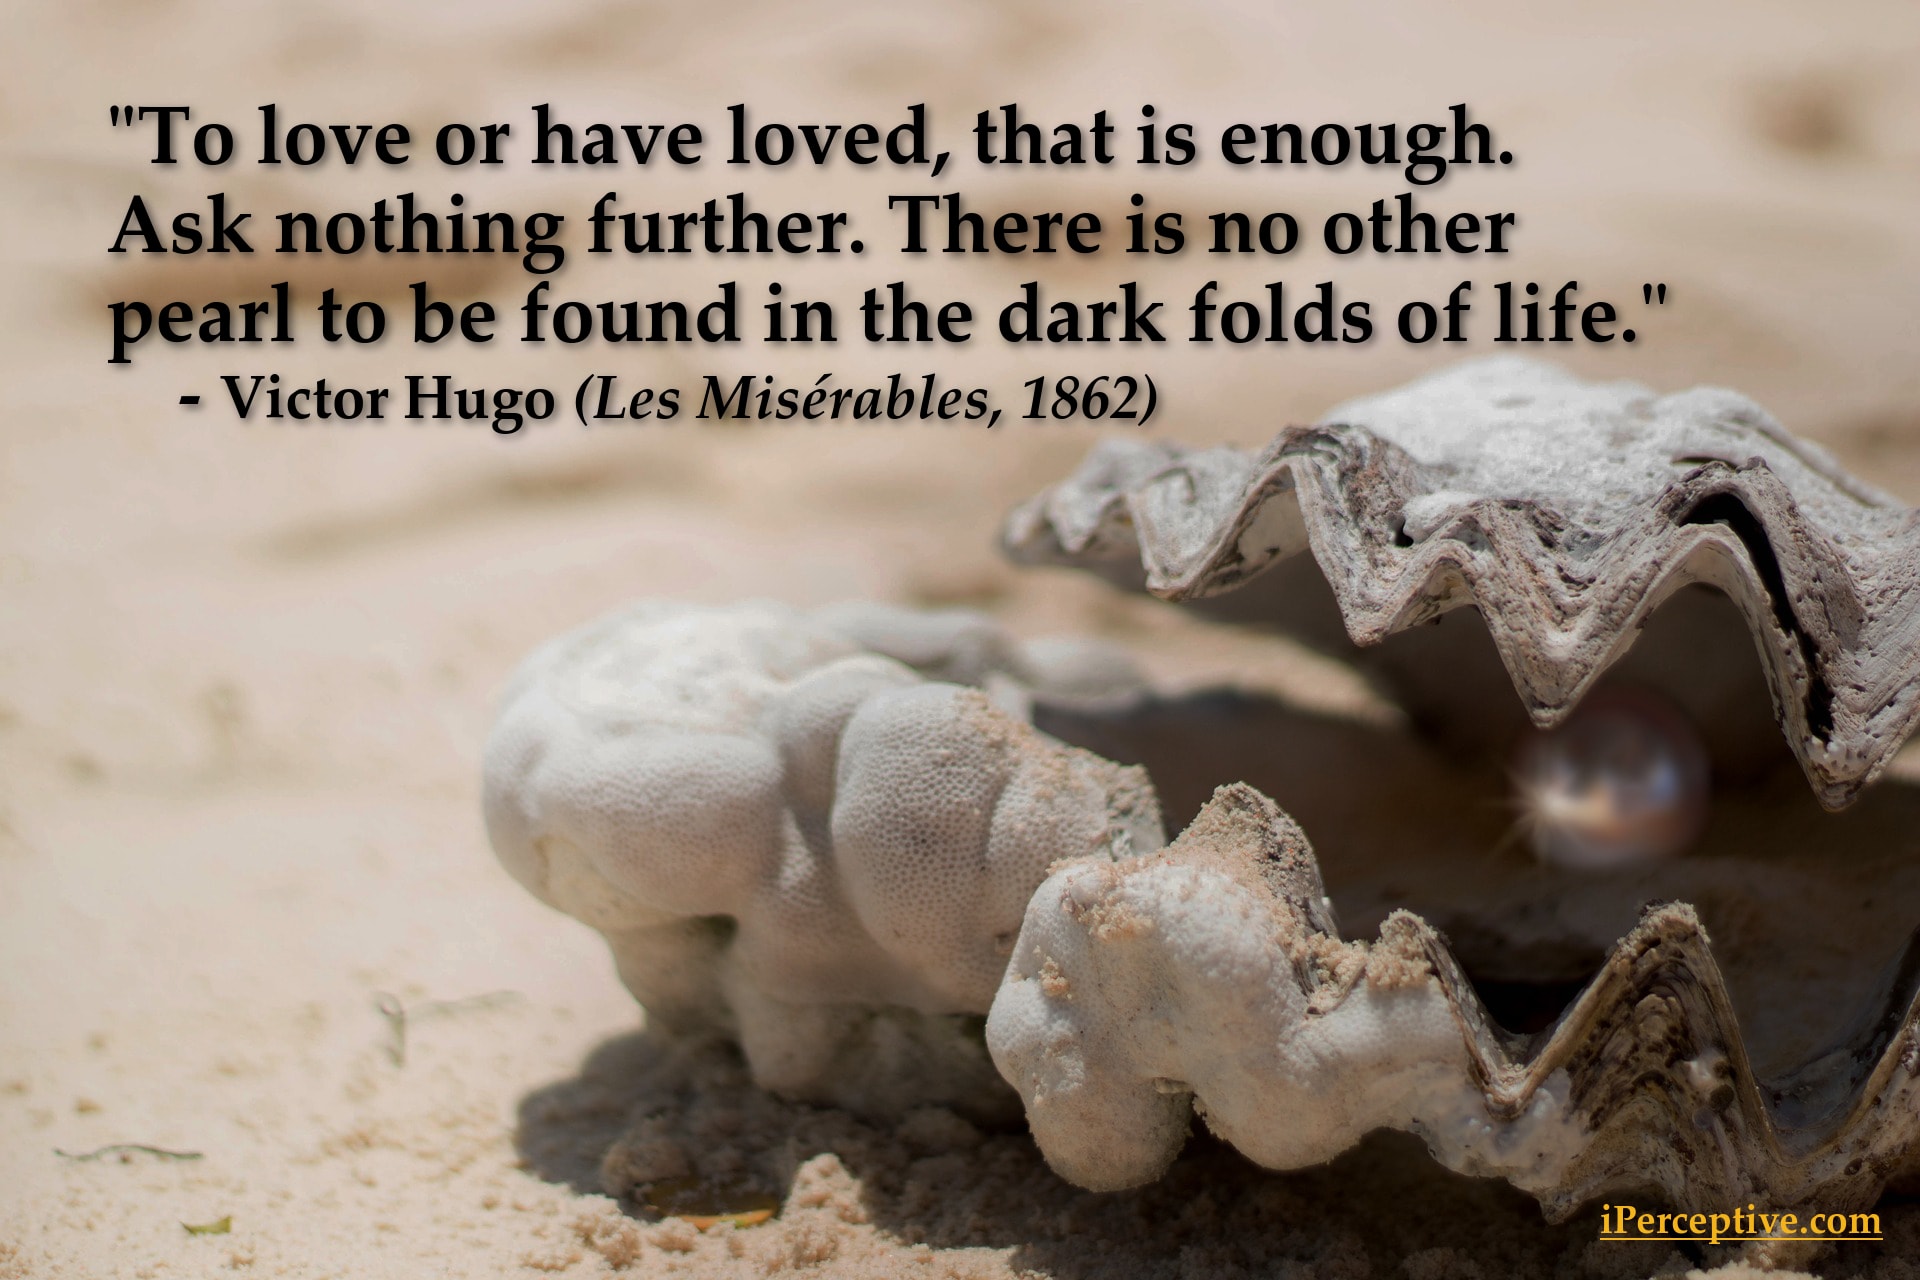 Victor Hugo Quote: Even the darkest night will end...